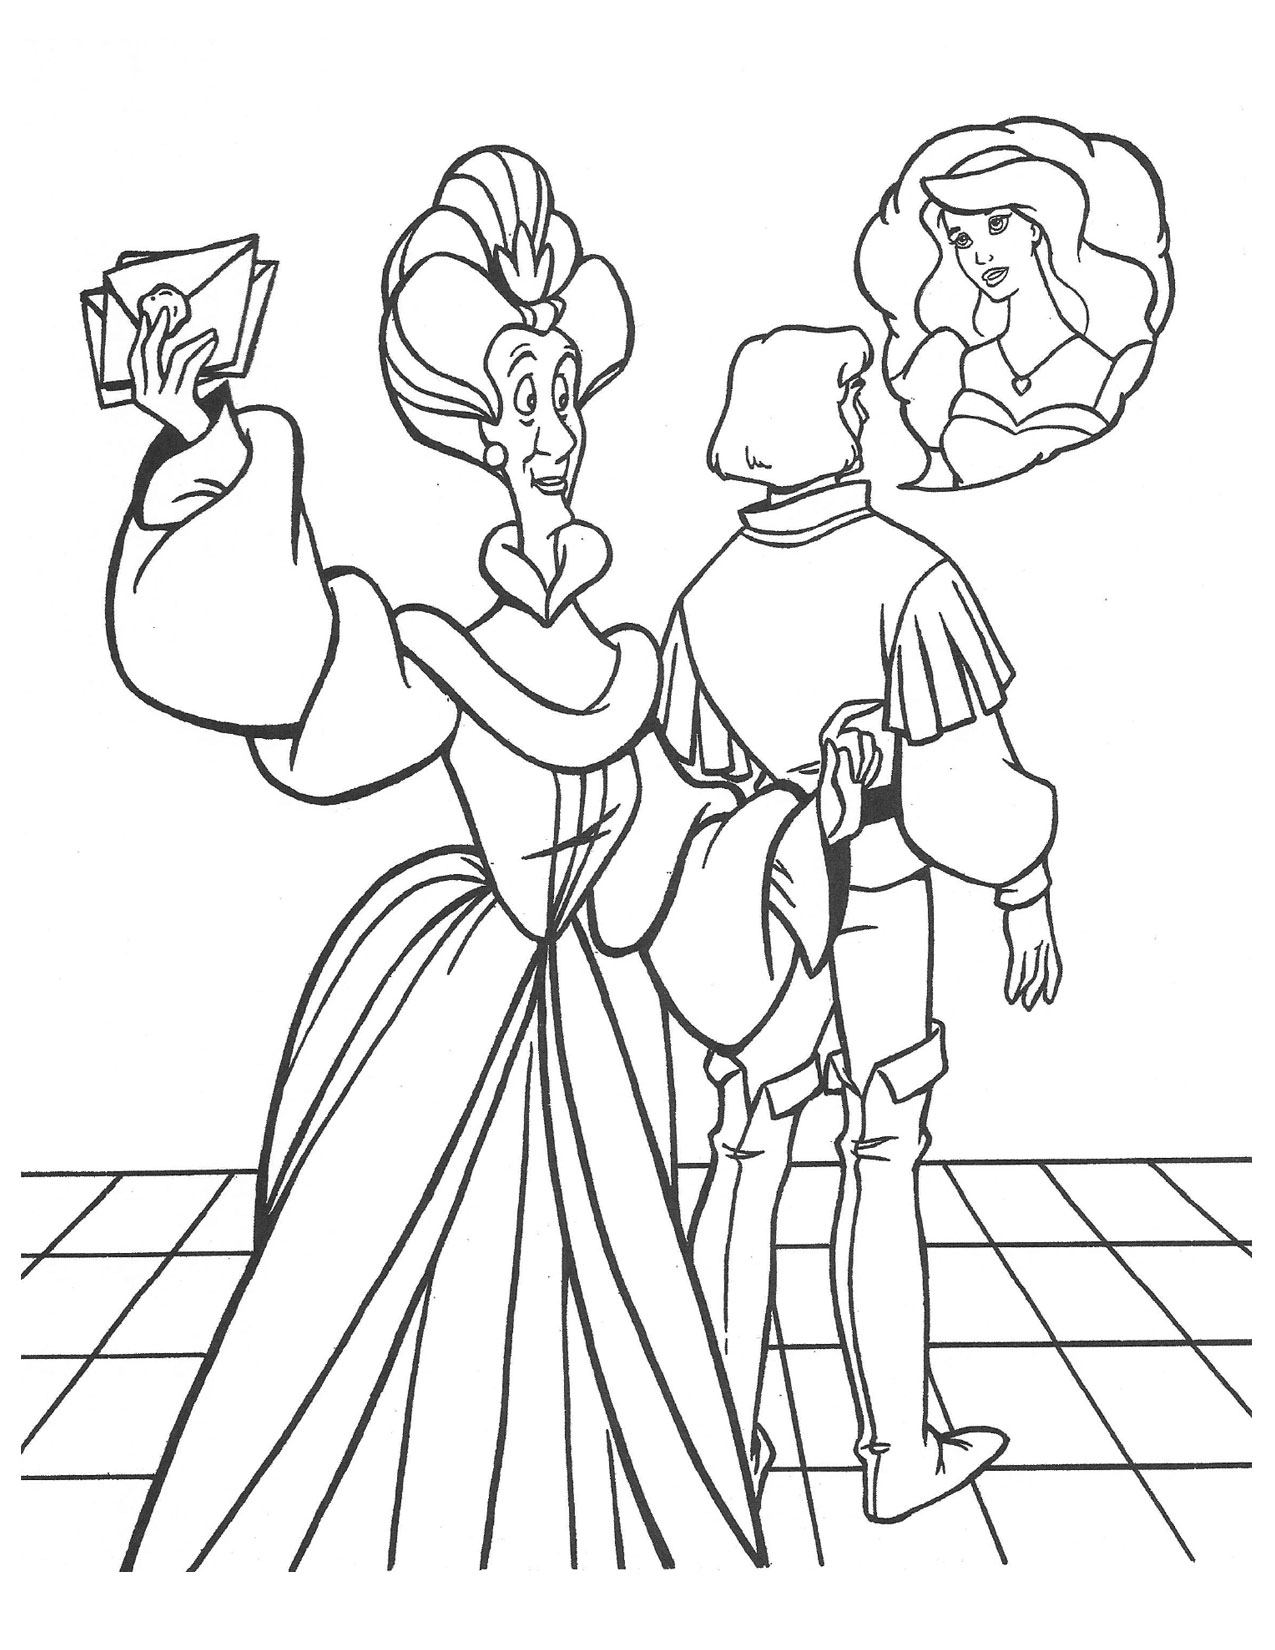 Swan Princess Prince Derek and Queen Uberta coloring page